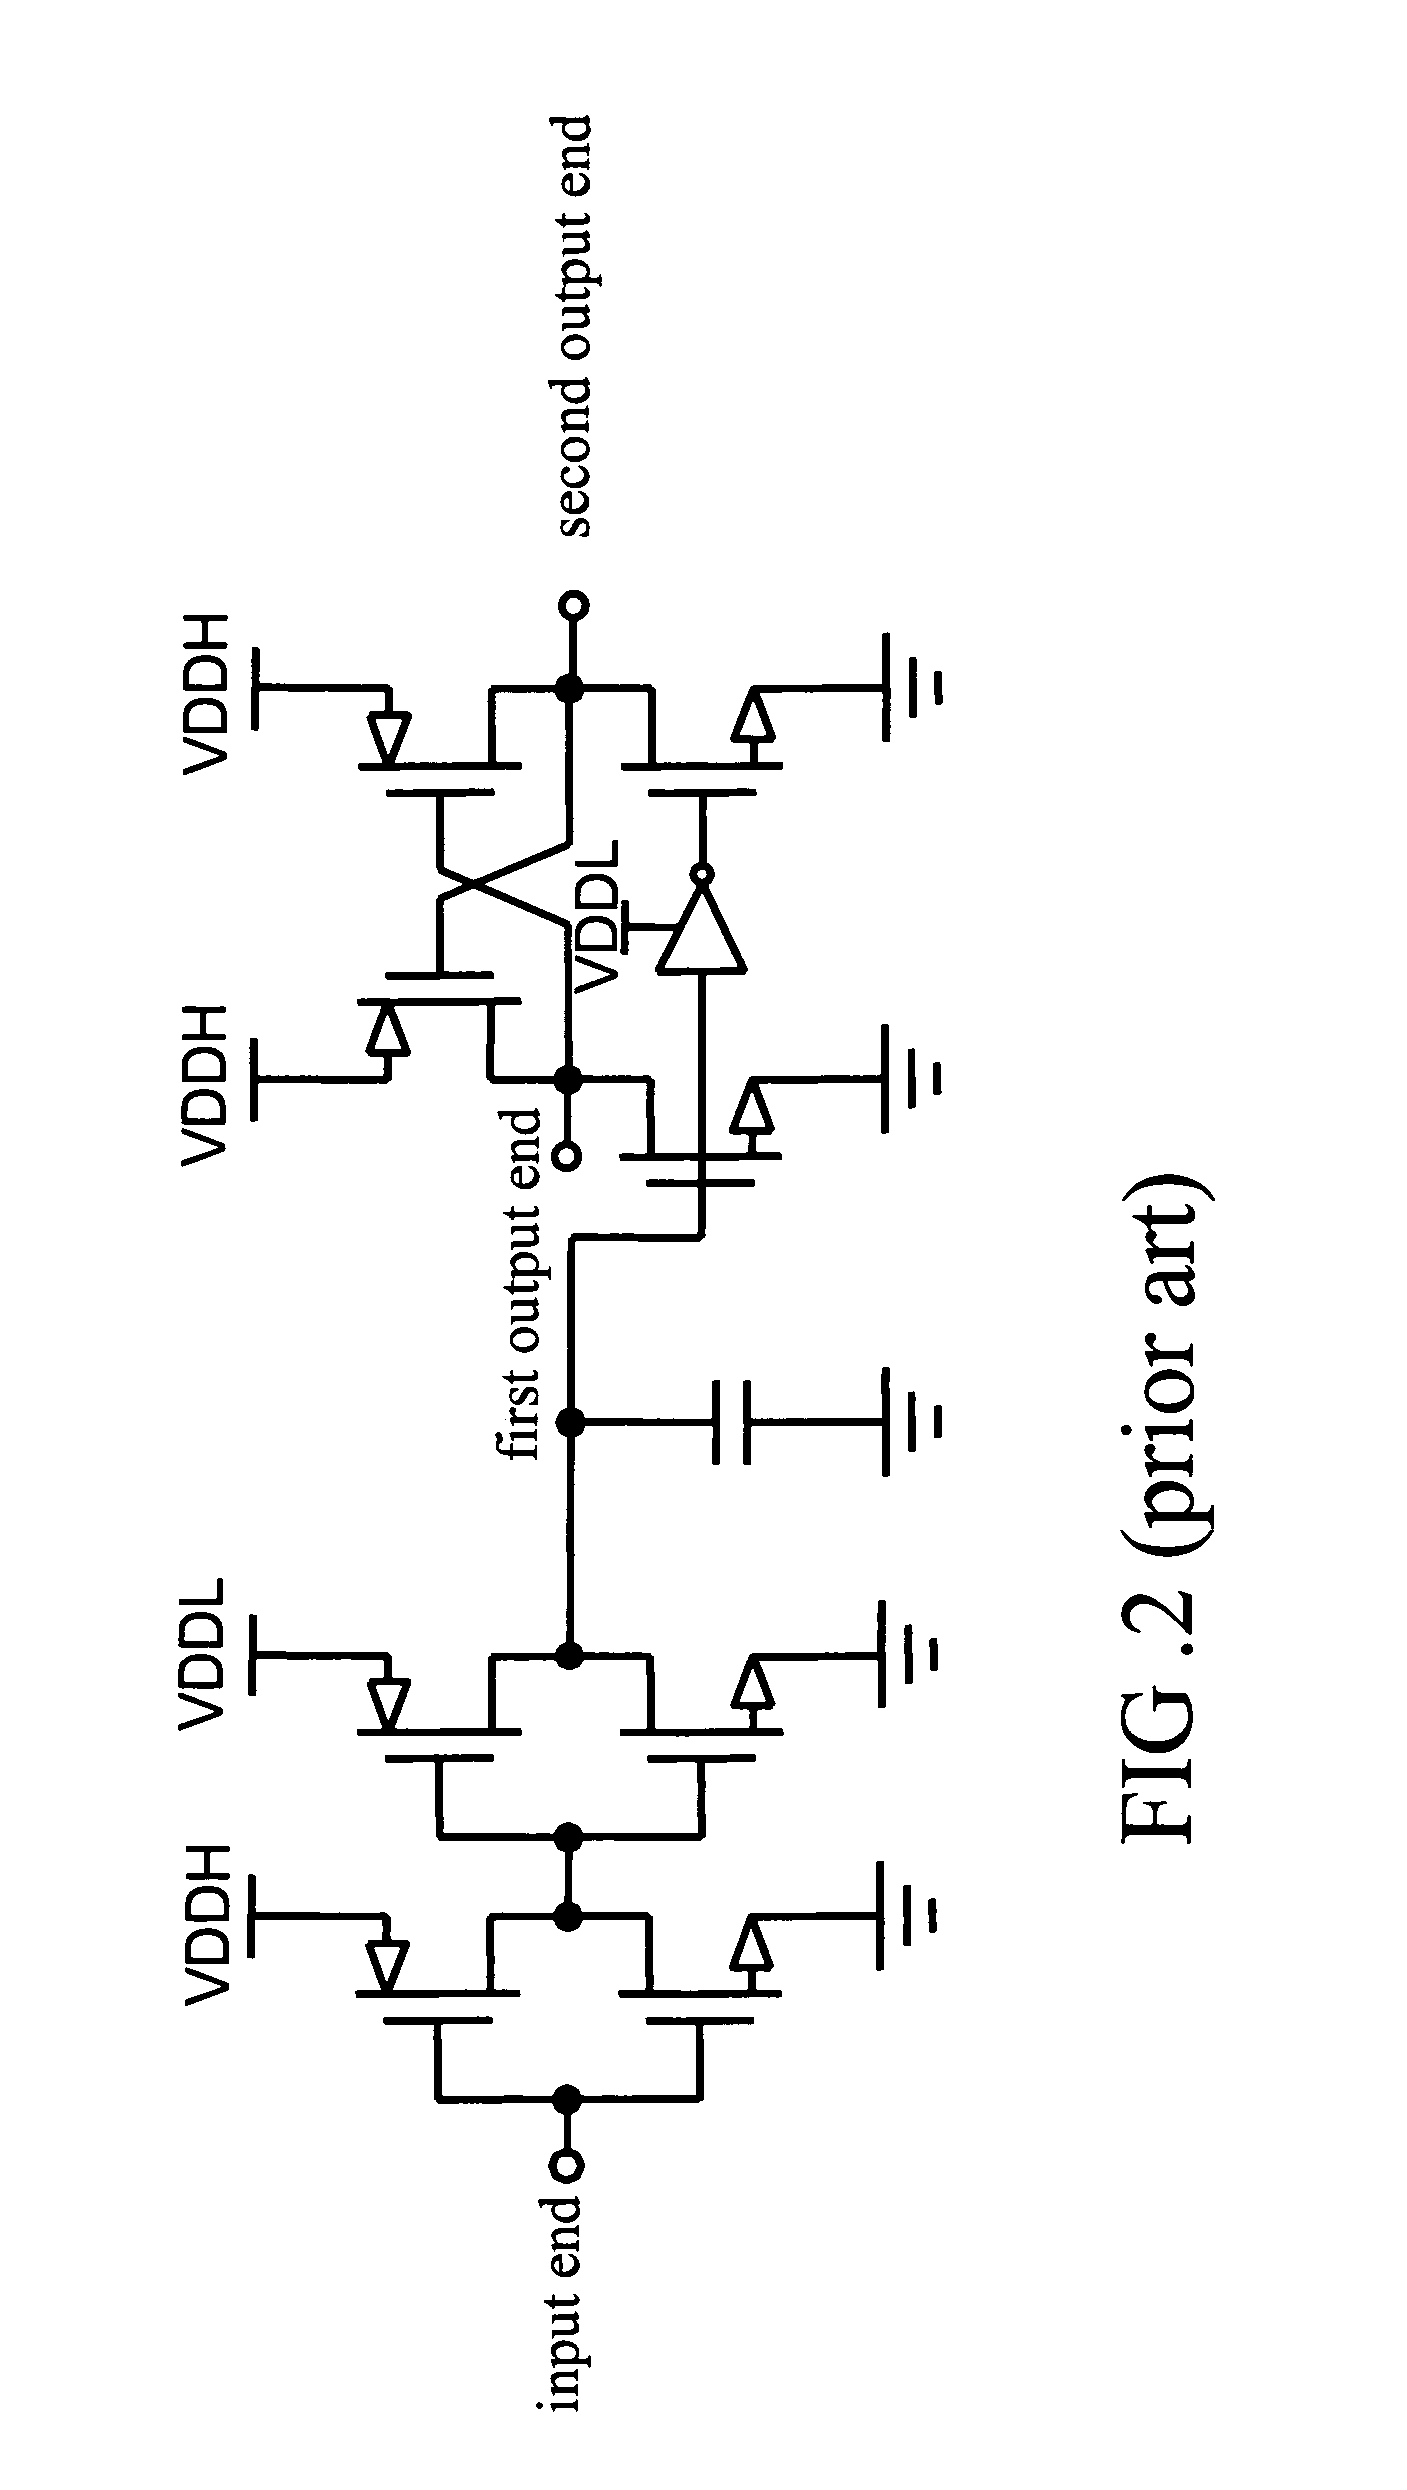 Bidirectional current-mode transceiver